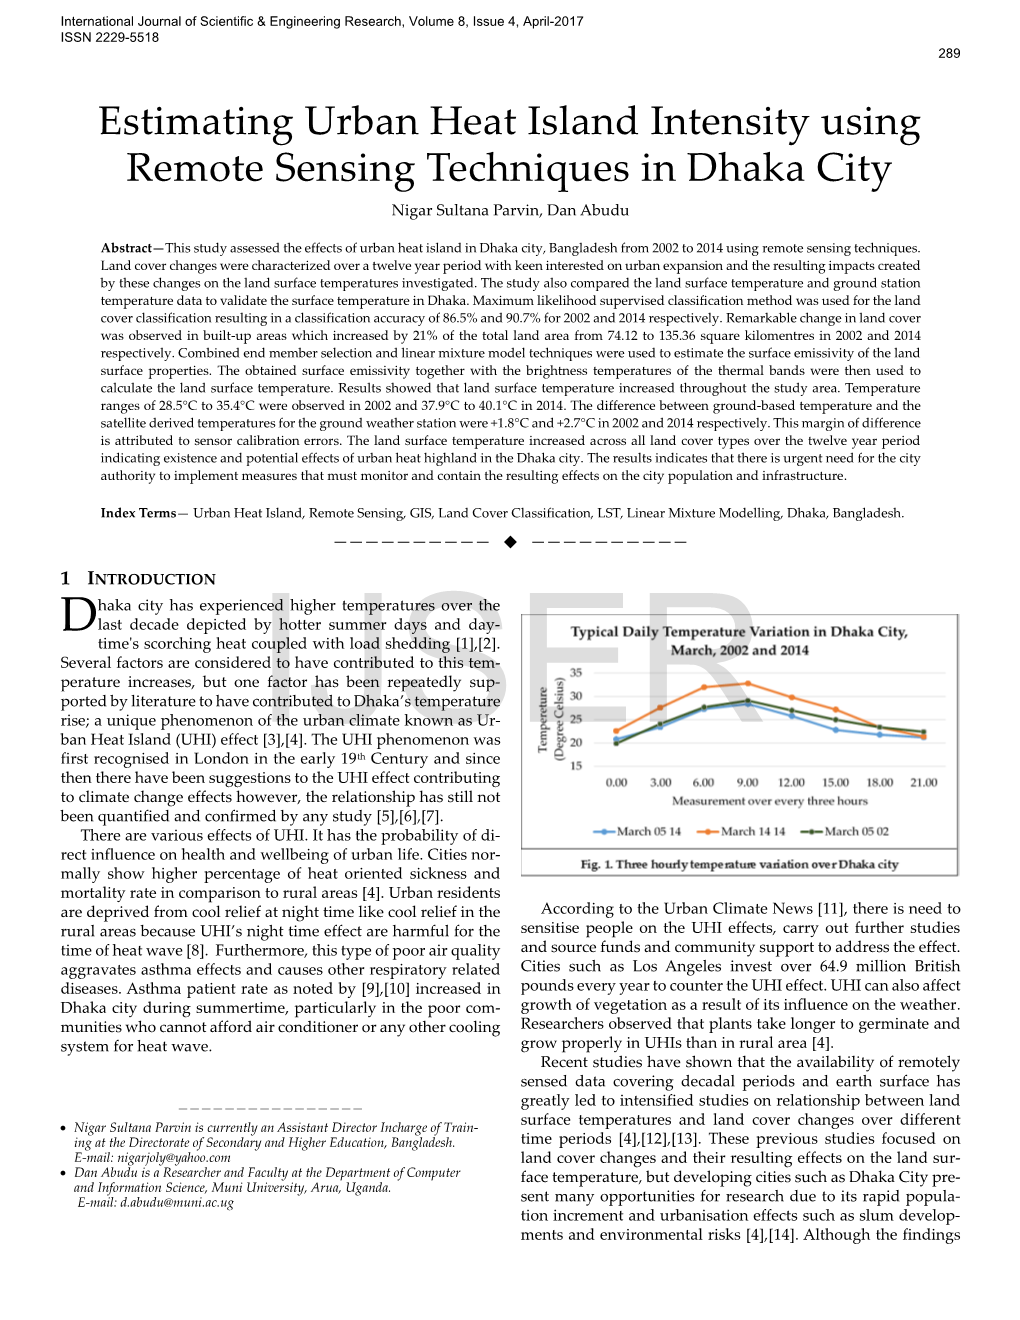 Estimating Urban Heat Island Intensity Using Remote Sensing Techniques in Dhaka City Nigar Sultana Parvin, Dan Abudu